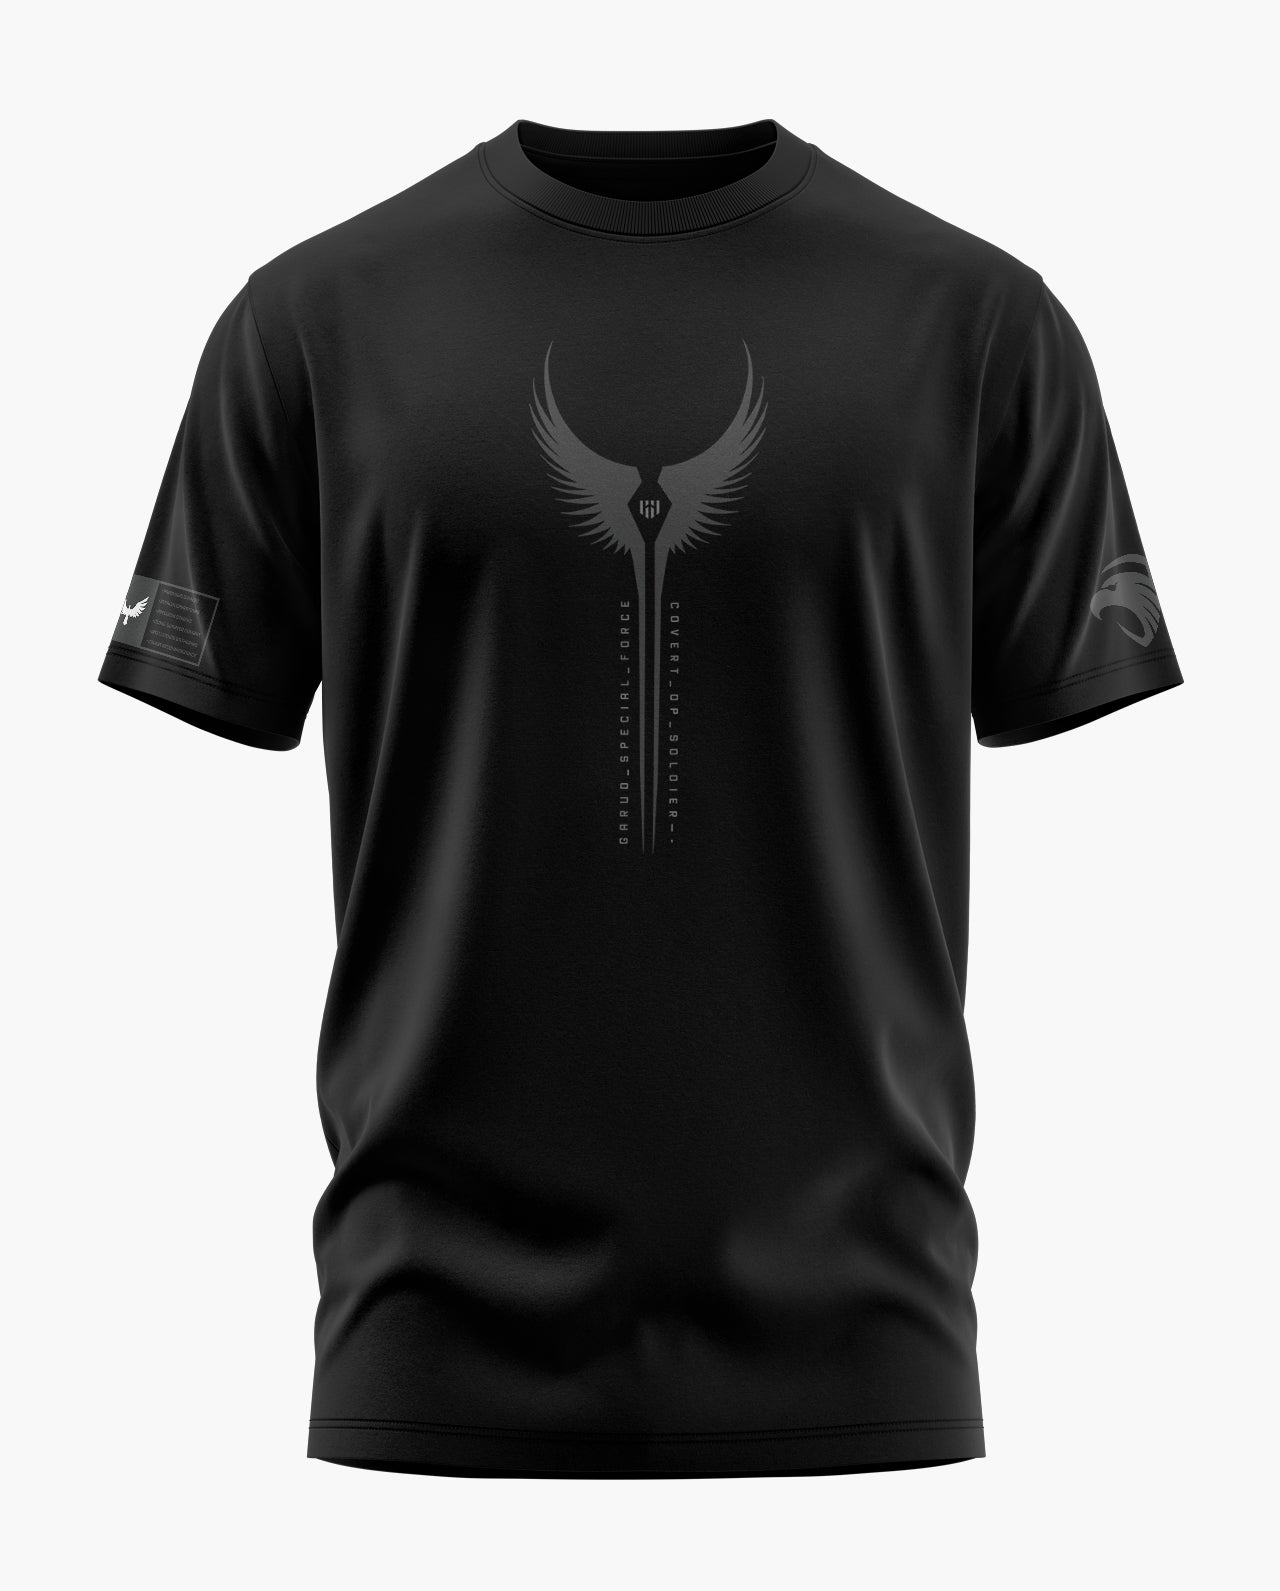 GARUD SF TACTICAL T-Shirt exclusive at Aero Armour